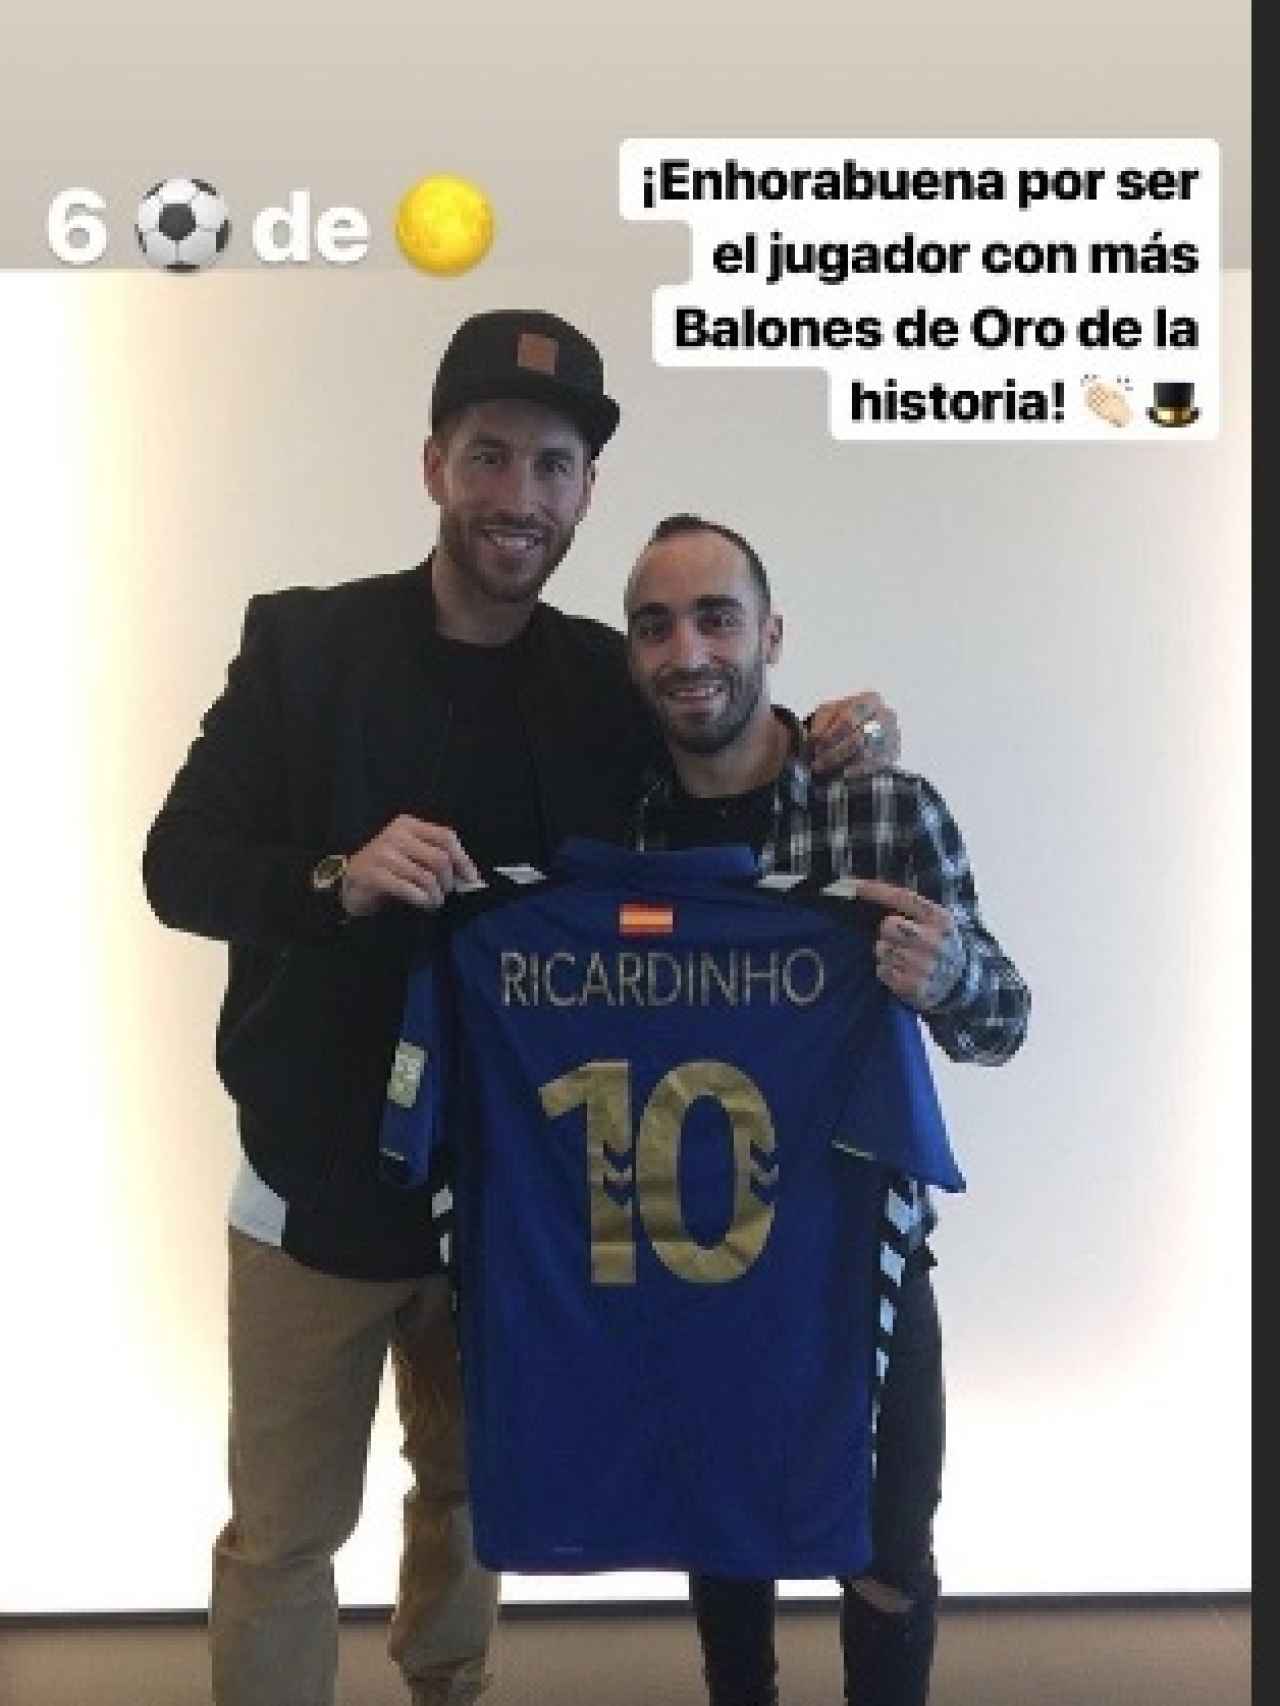 Ramos felicita a Ricardinho por su sexto balón de oro. Foto Historias de Instagram: (@sergioramos)